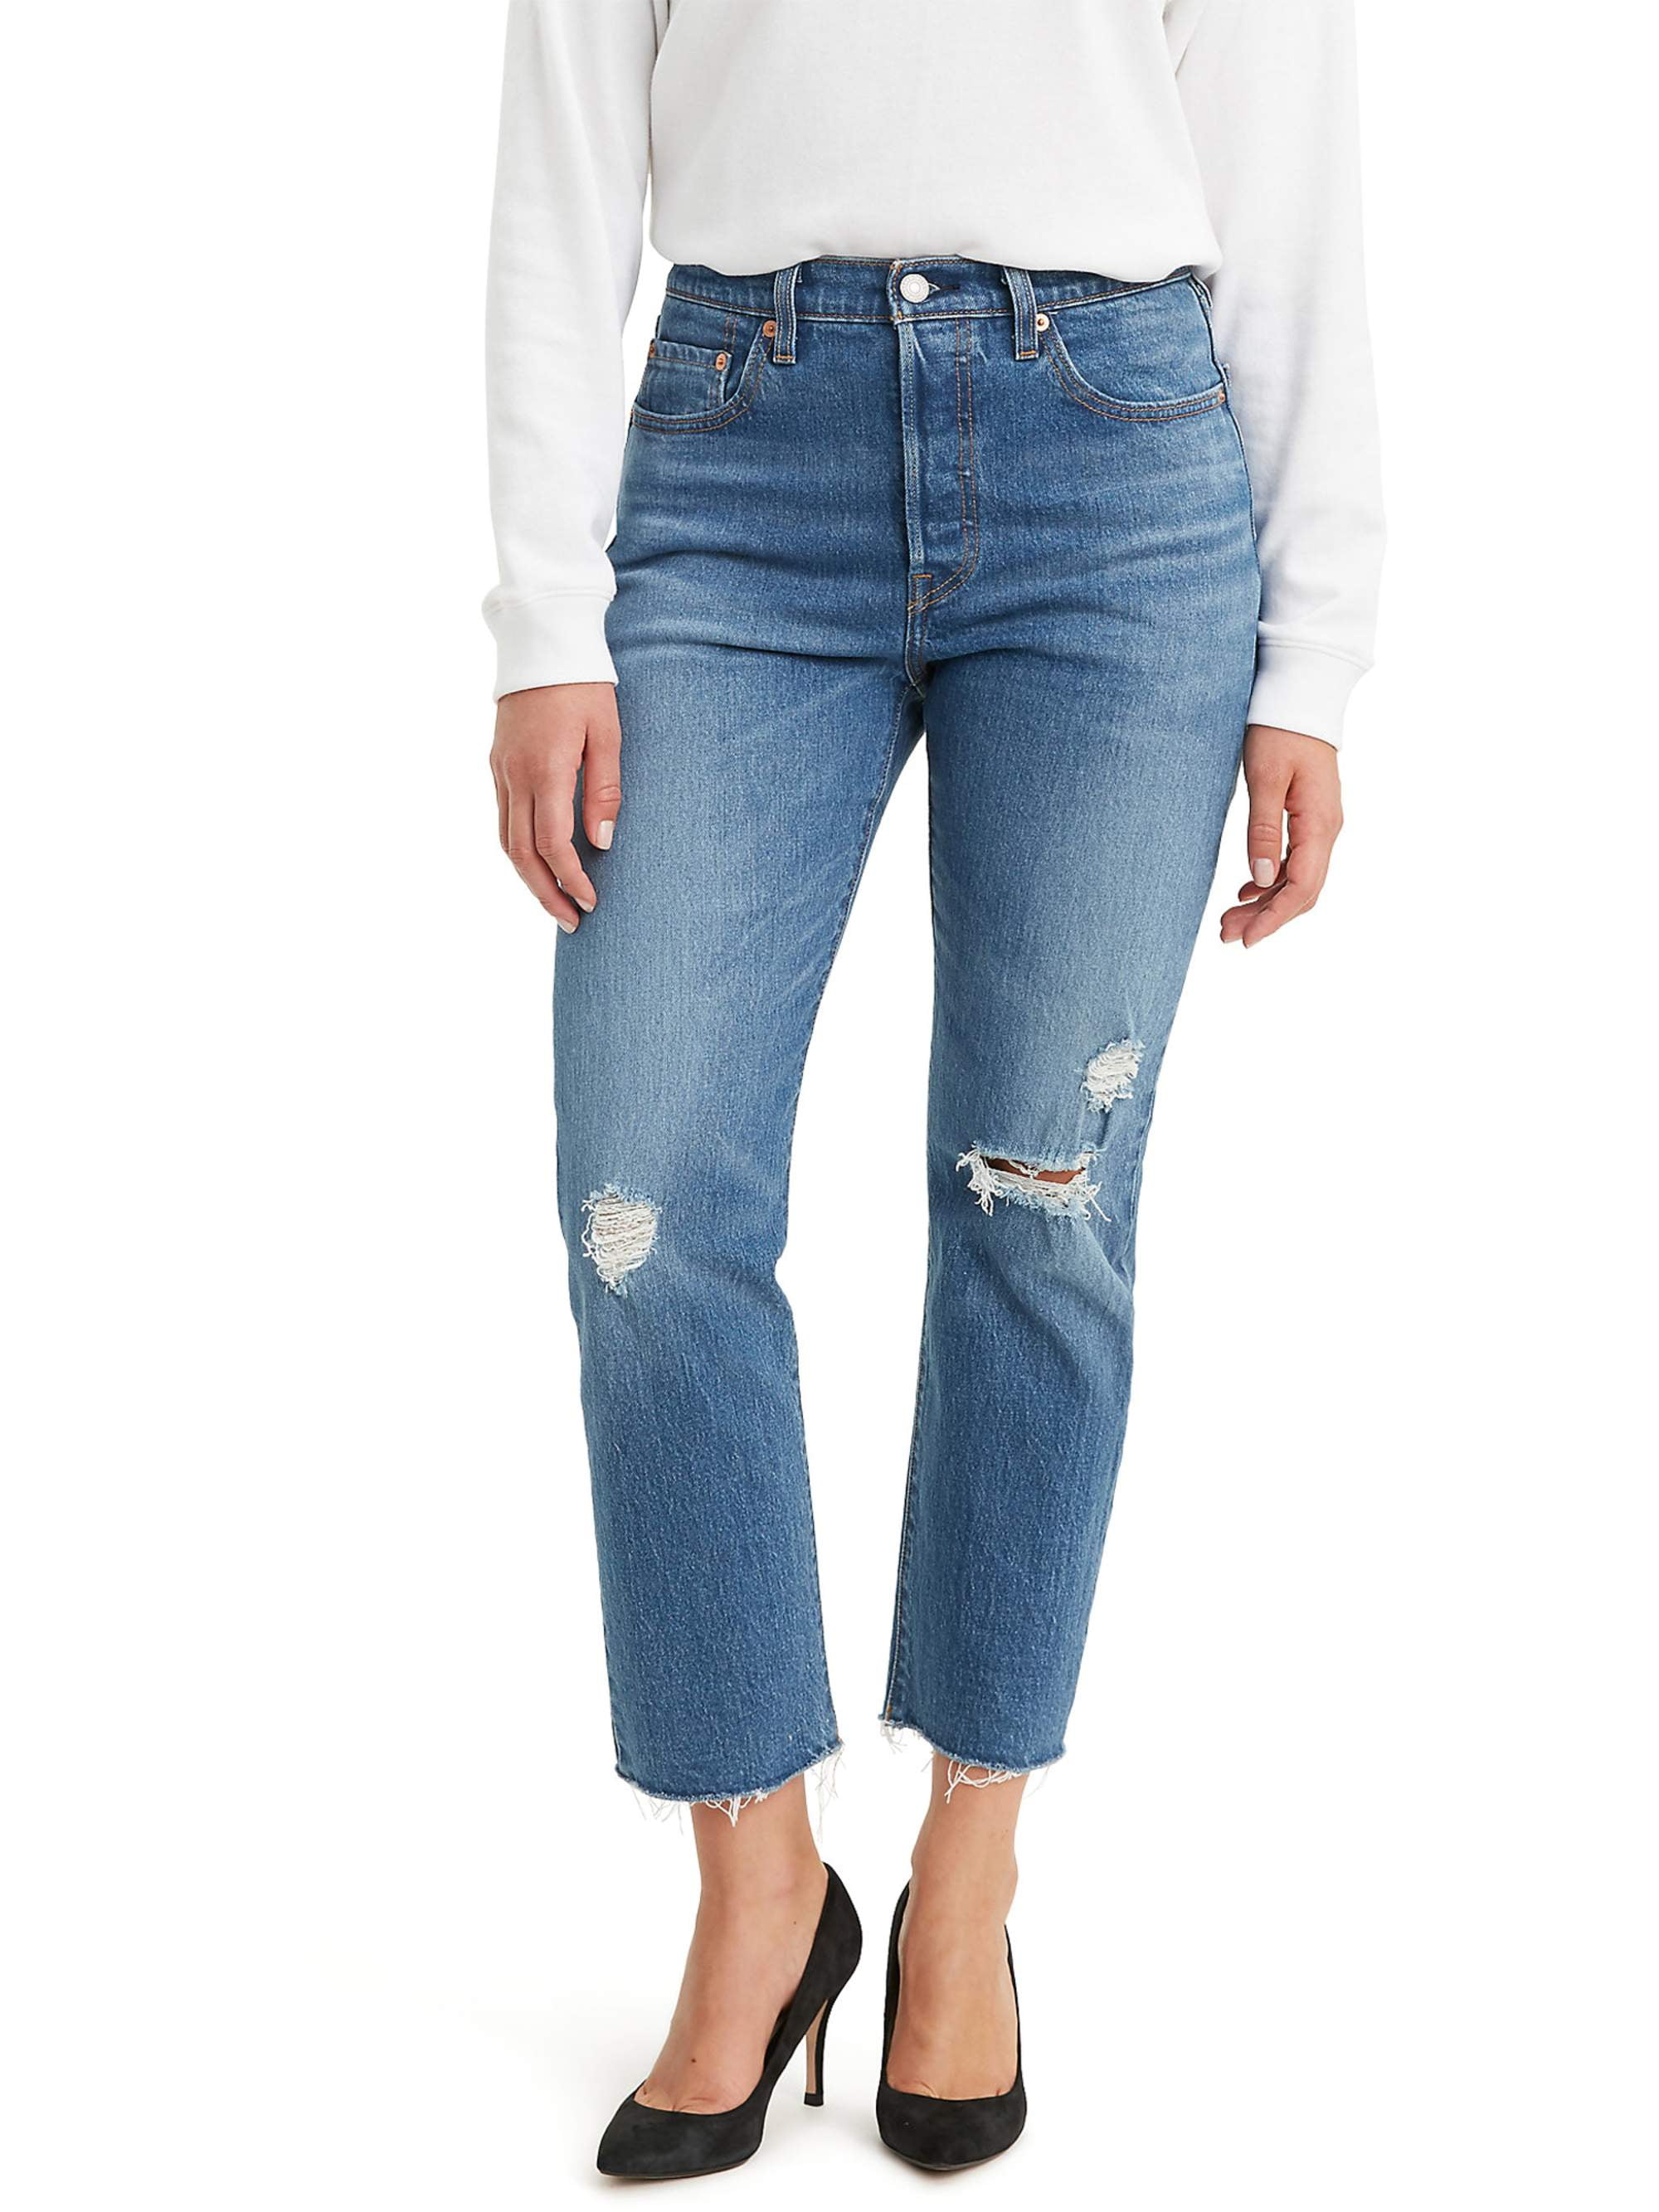 Levi's Women's 501 Original Cropped Jeans - Walmart.com